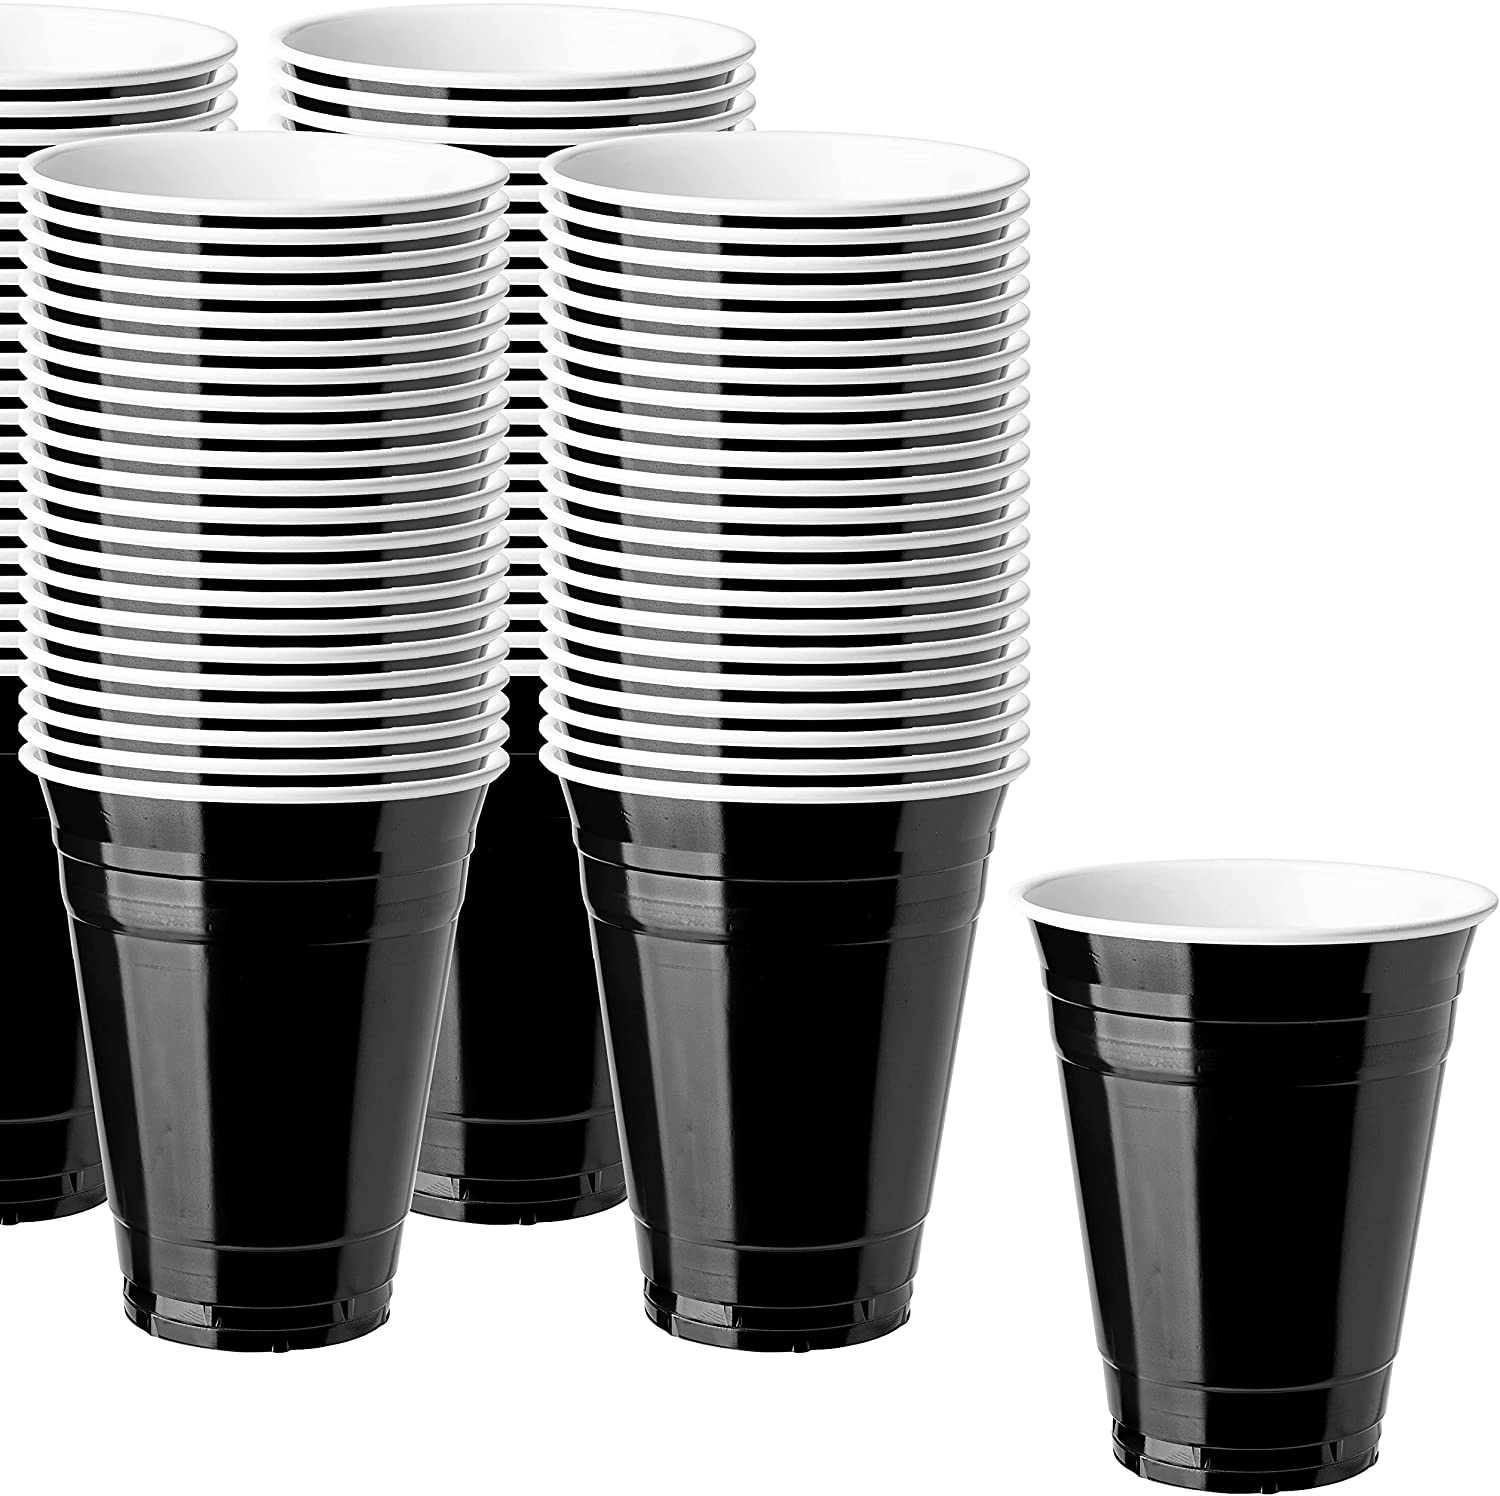 Choice 16 oz. Black Plastic Cup - 50/Pack